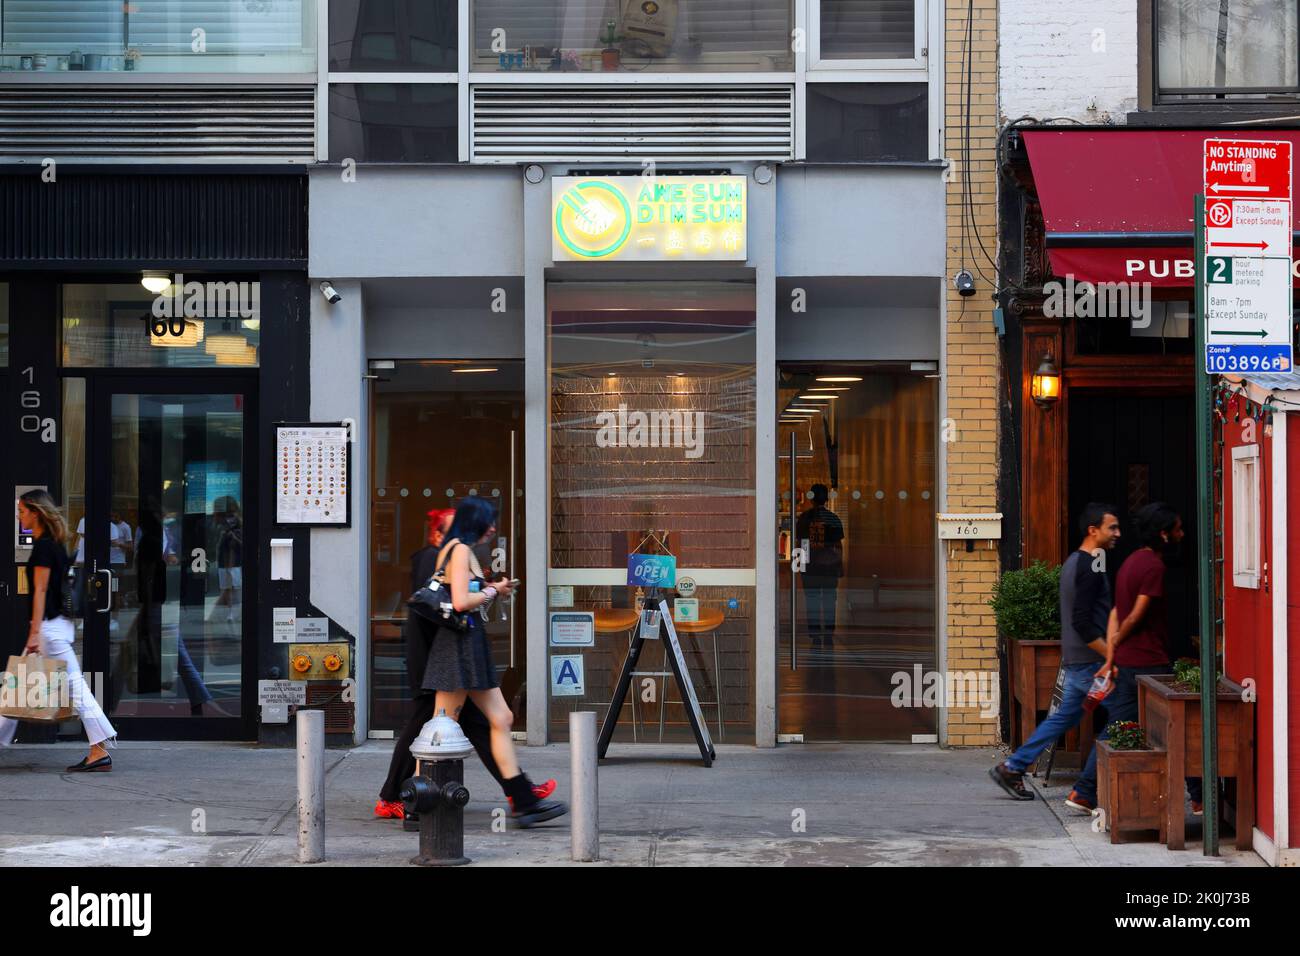 AweSum DimSum, 160 e 23rd St, New York, NYC foto di un ristorante cinese cantonese Awe Sum dim sum nel quartiere di Gramercy. Foto Stock